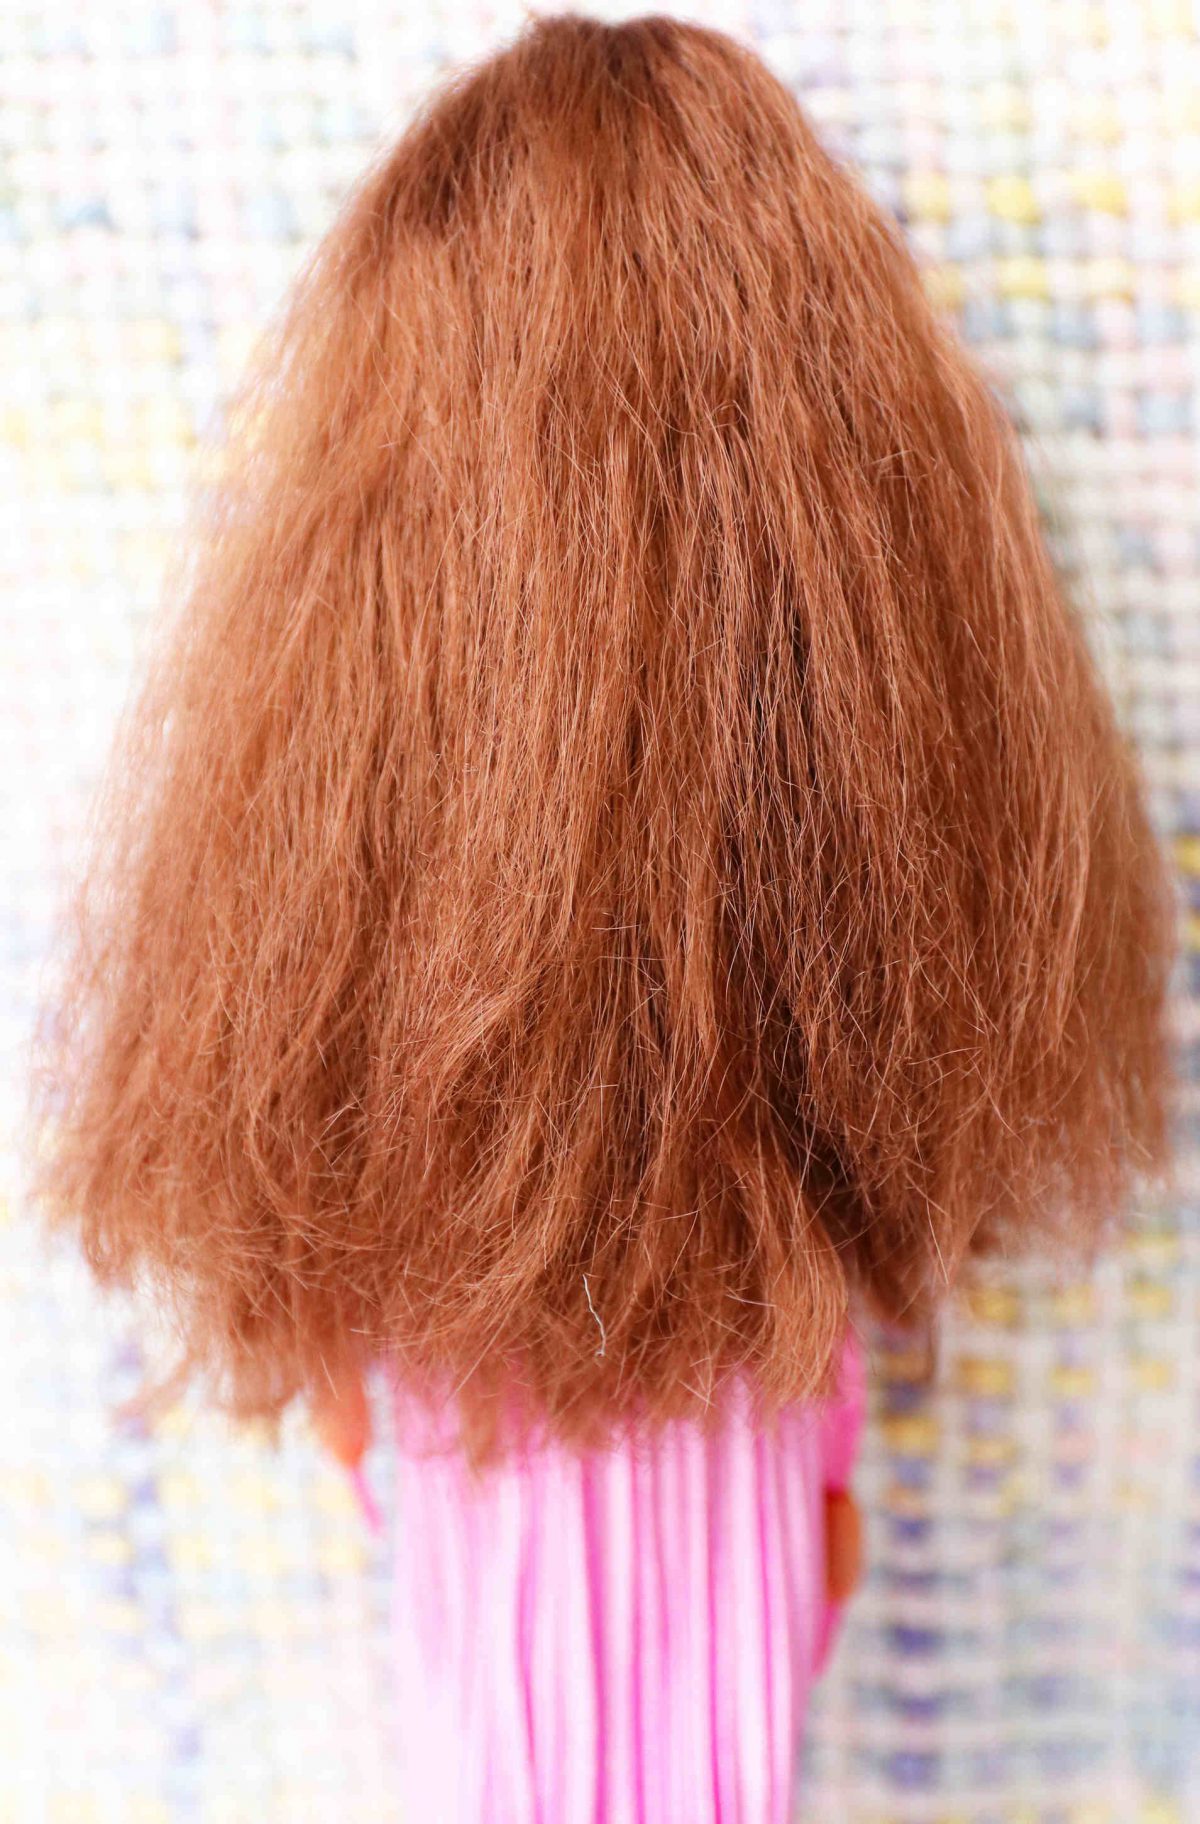 How To Revive Old Barbie Hair! - Komonogatari